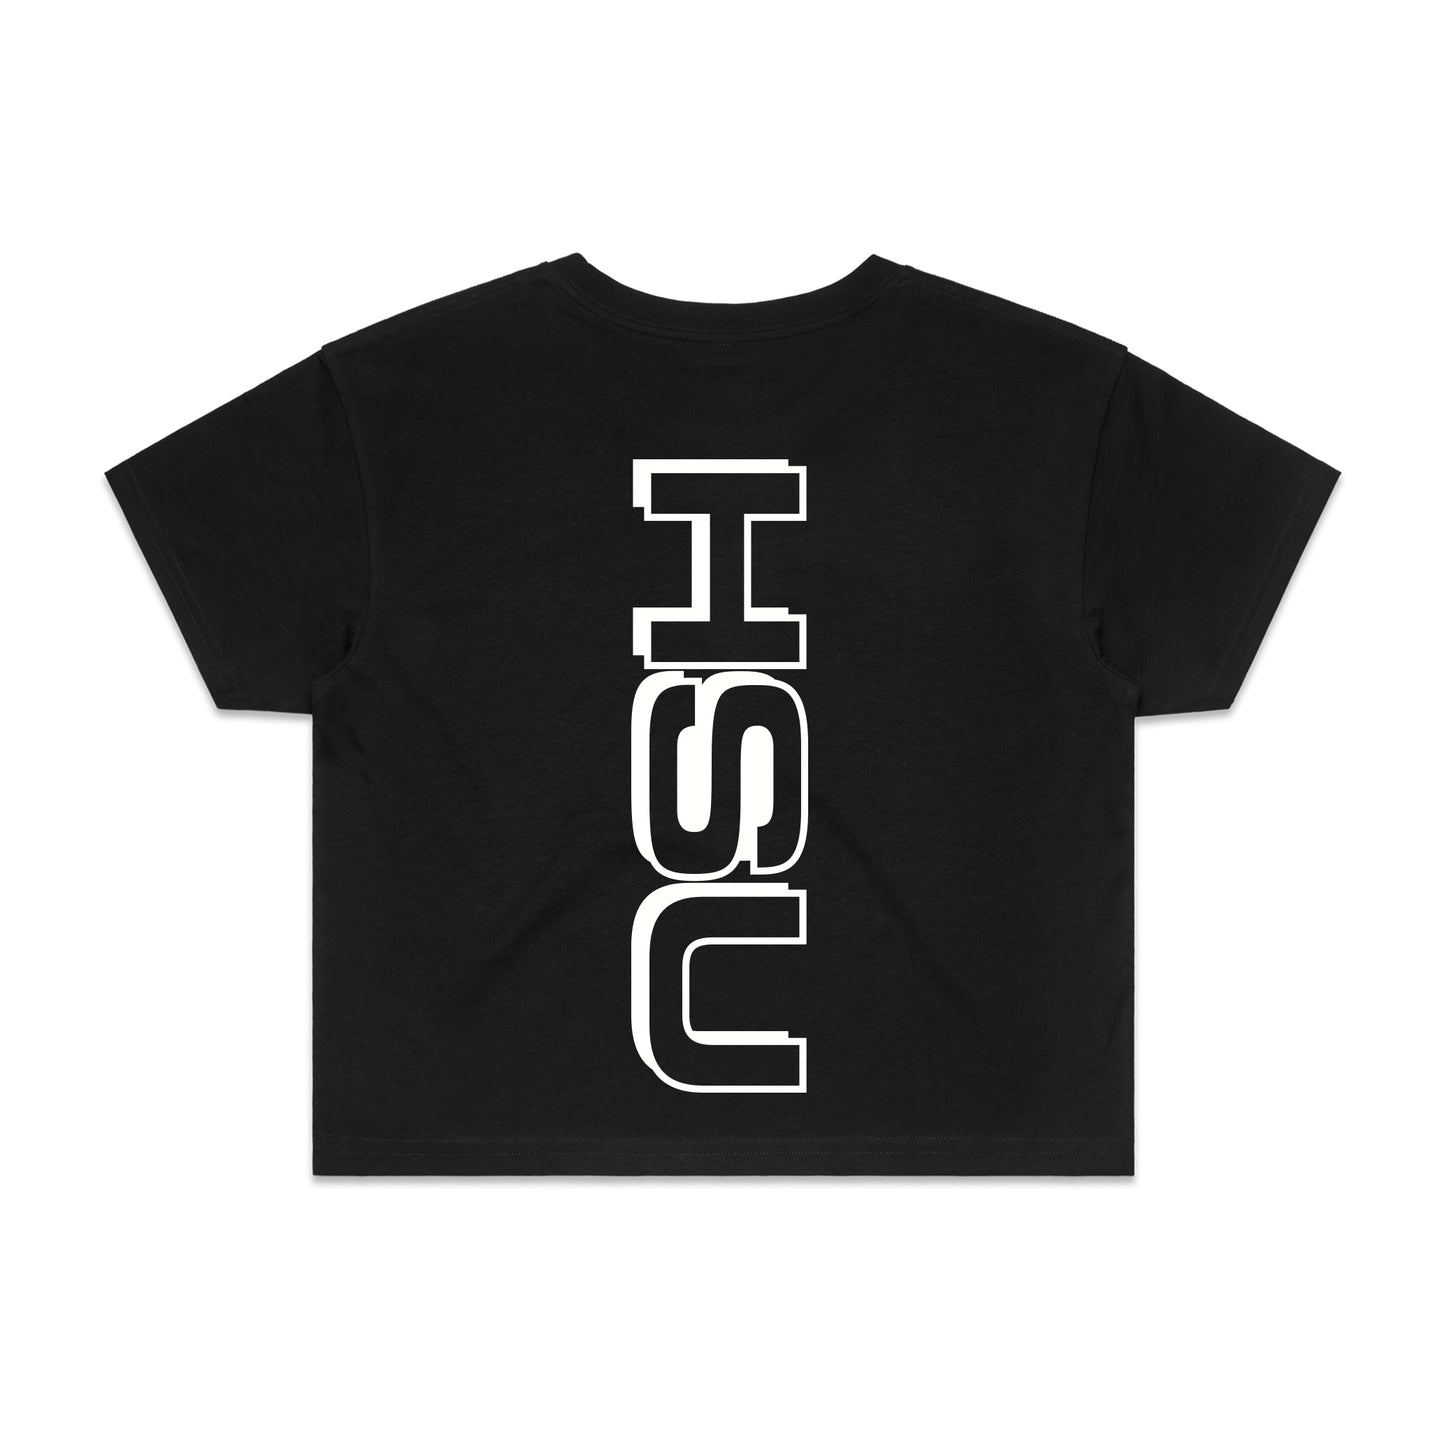 HSU Black Crop Top x White Print